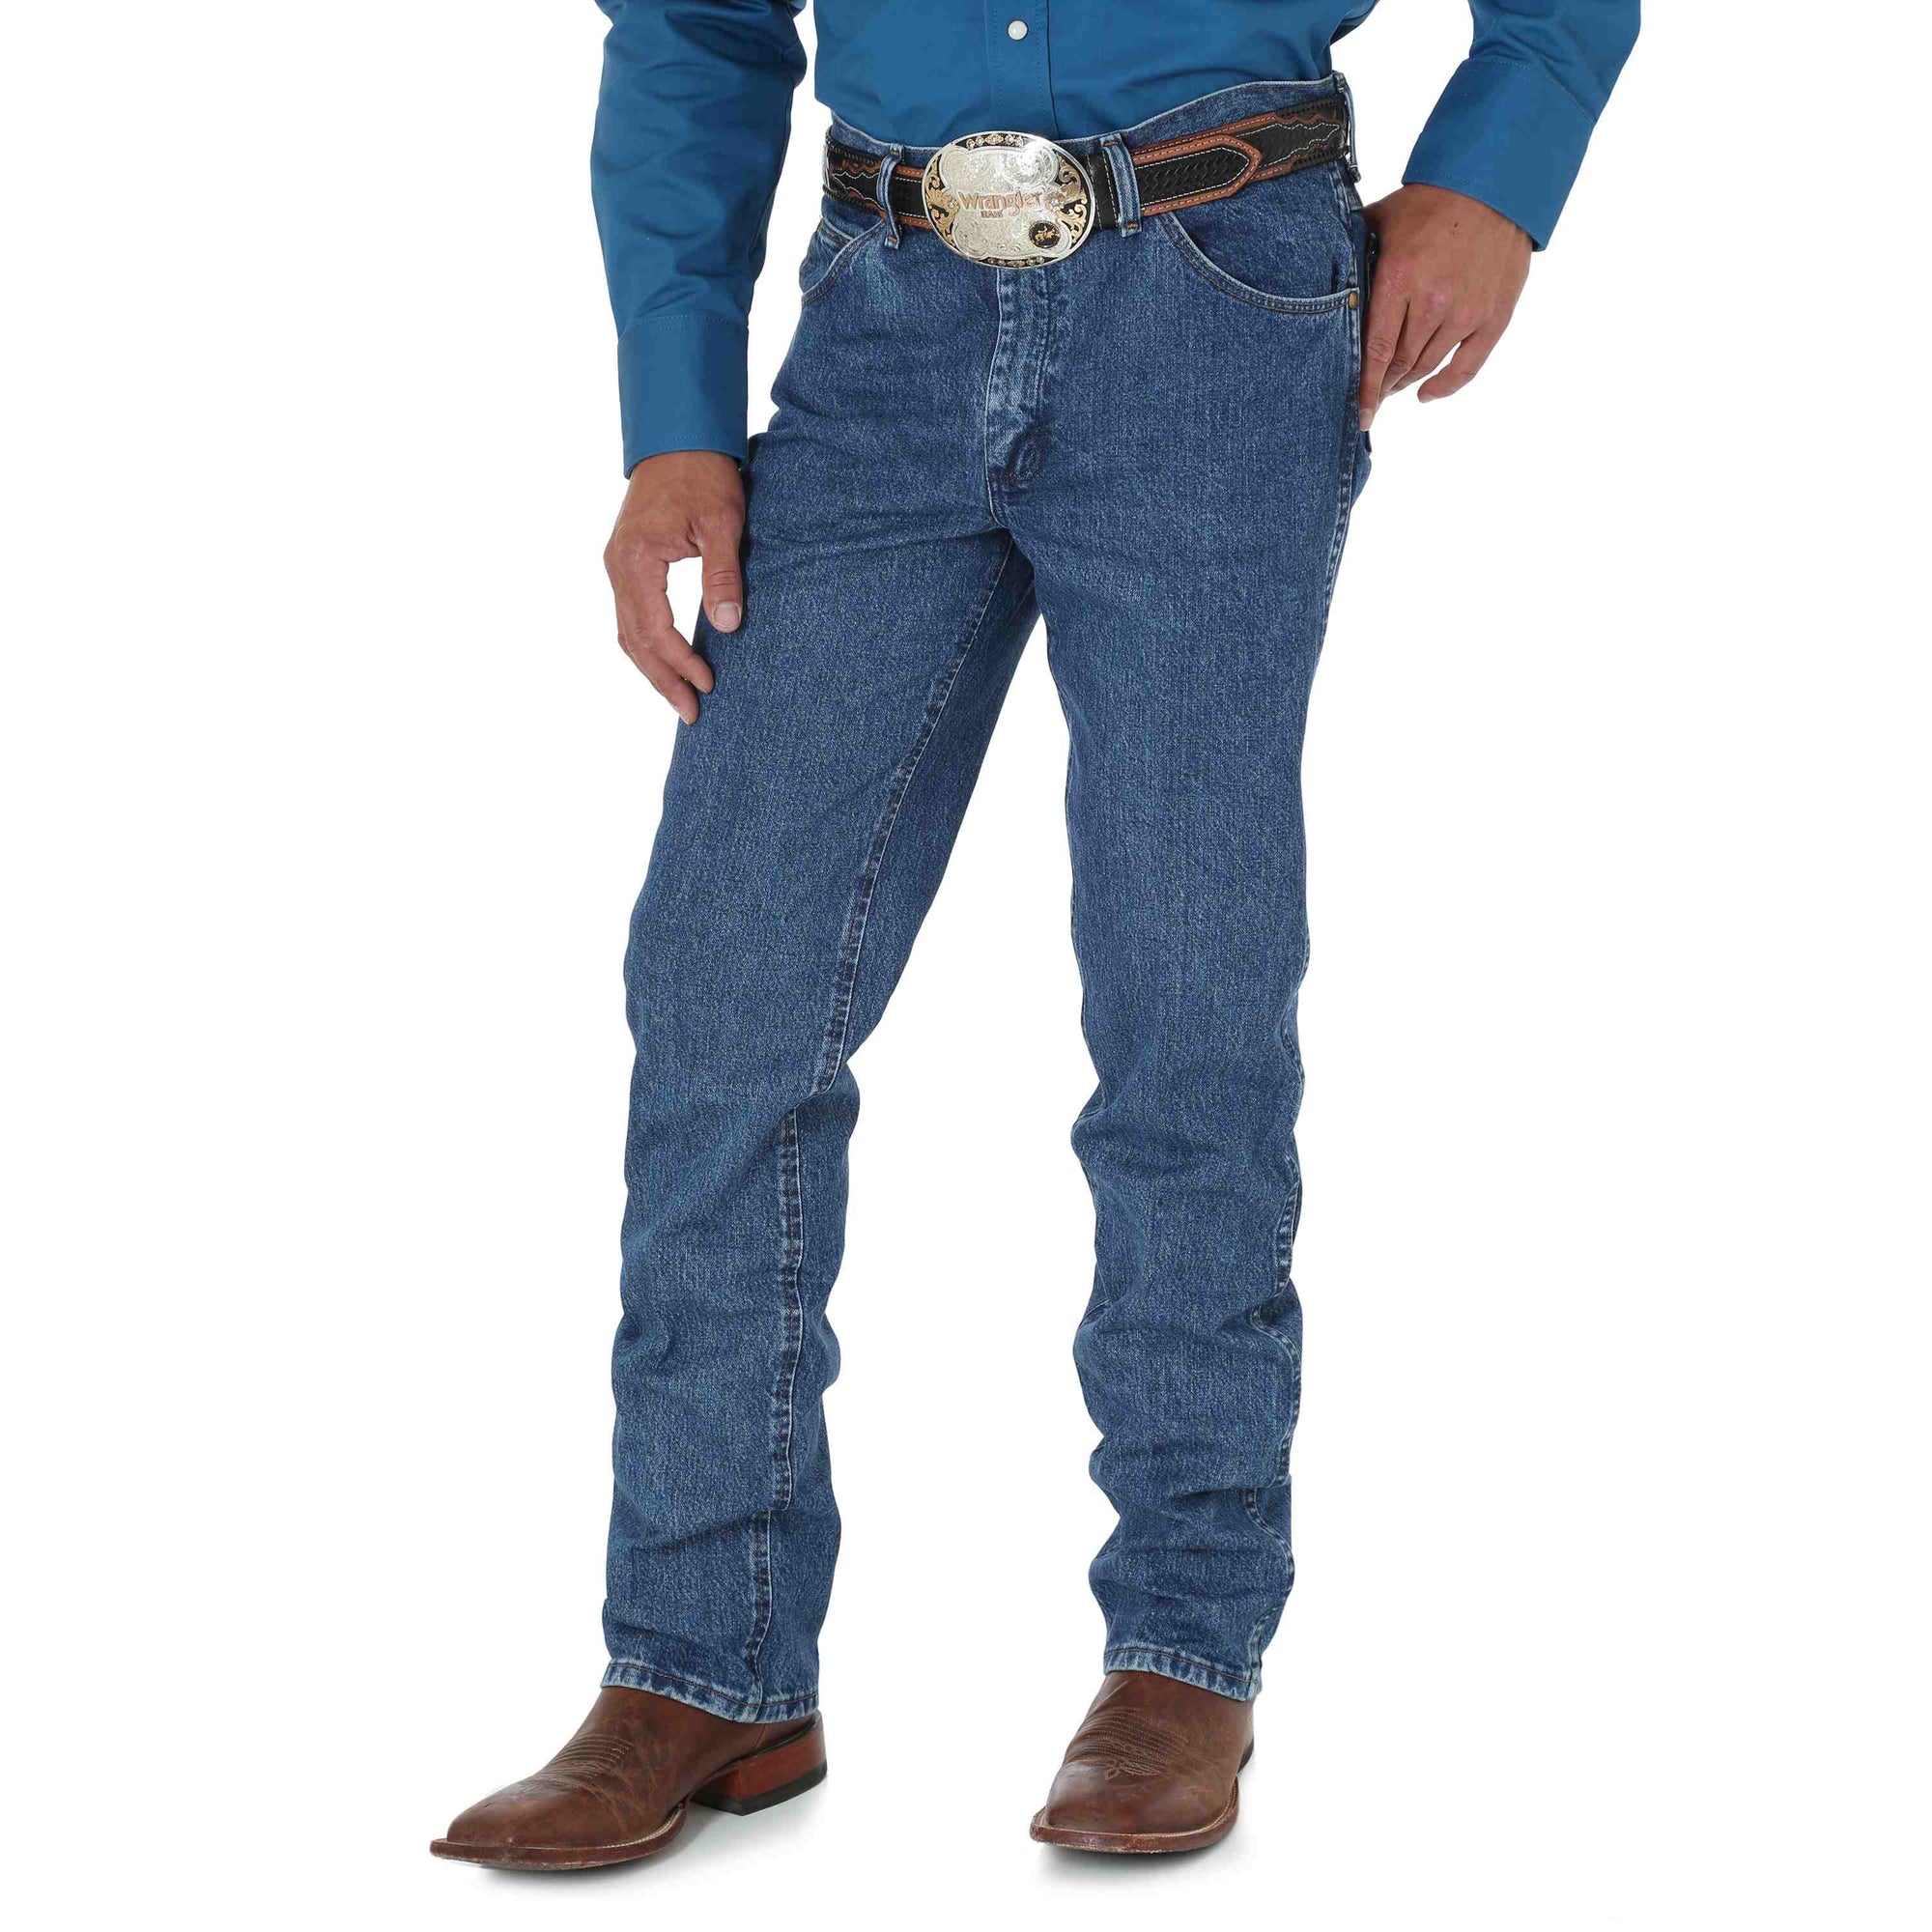 Wrangler Jeans Wrangler Men's Premium Performance Jeans Dark Stone Cowboy Cut Slim Fit Jeans 36MWZDS